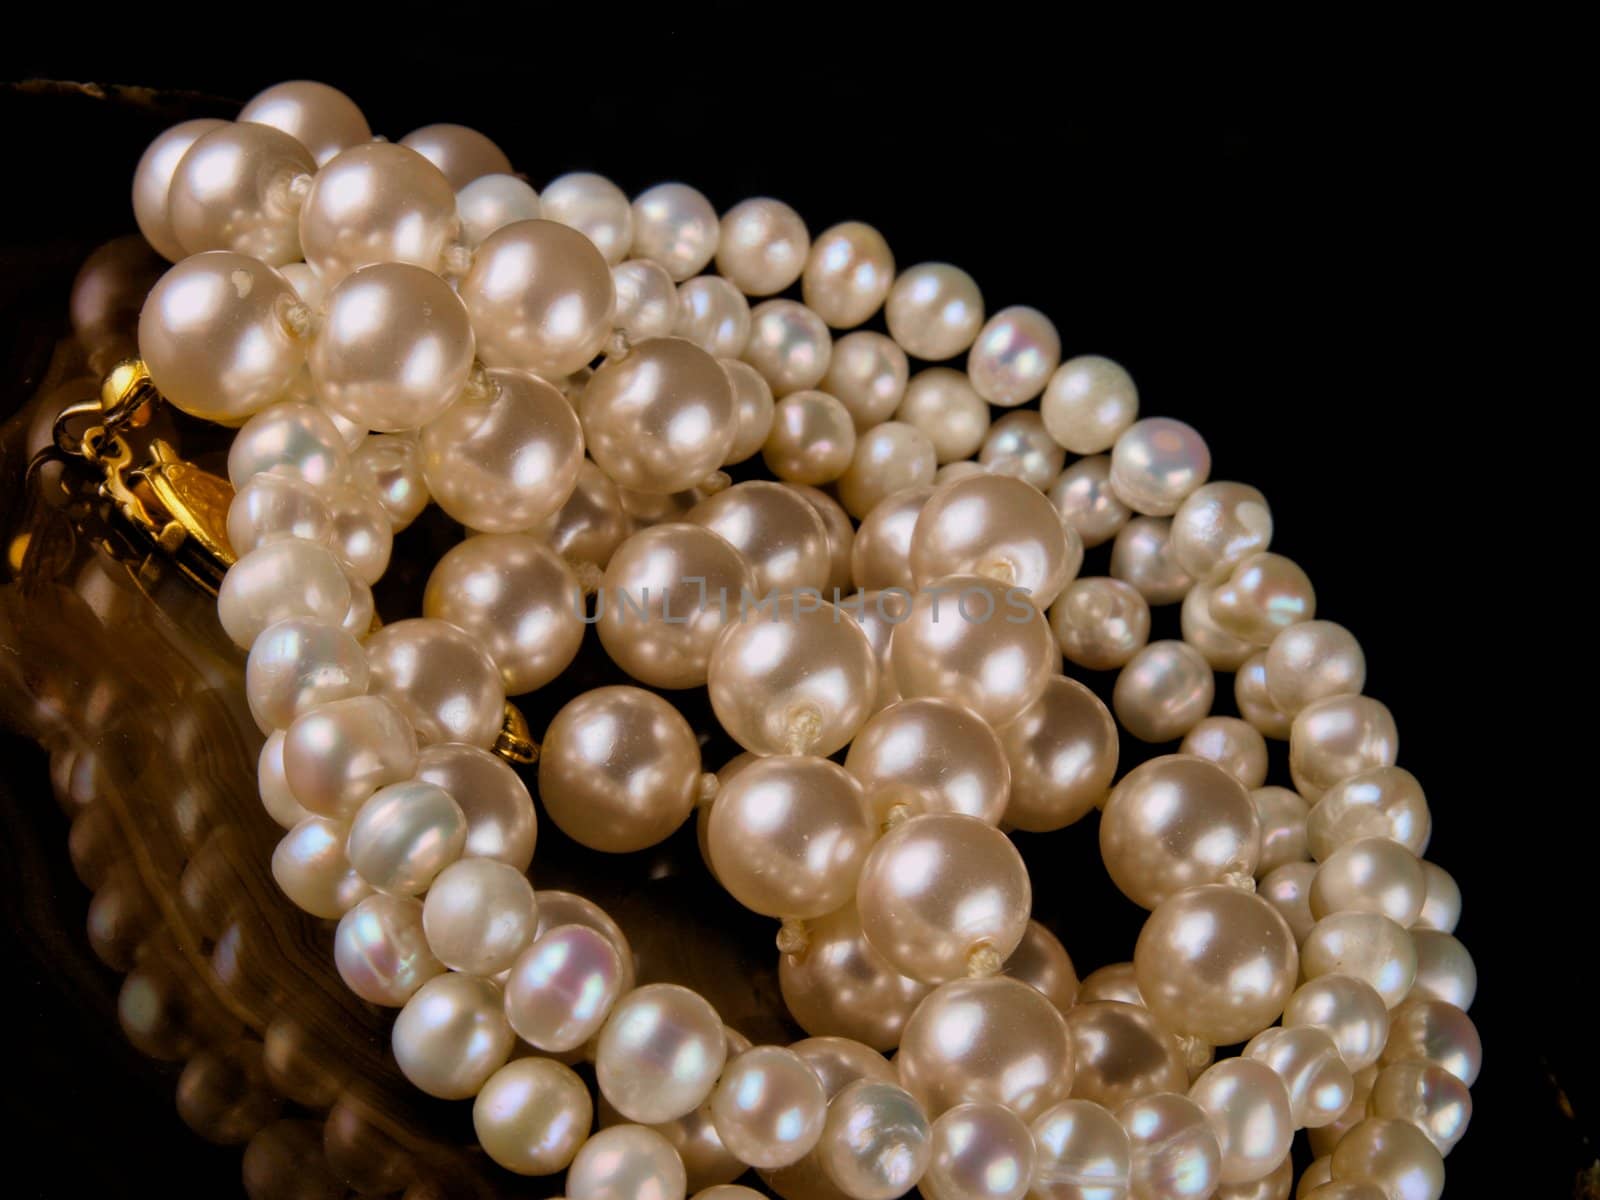 pearl bracelet close up on black background by dotweb